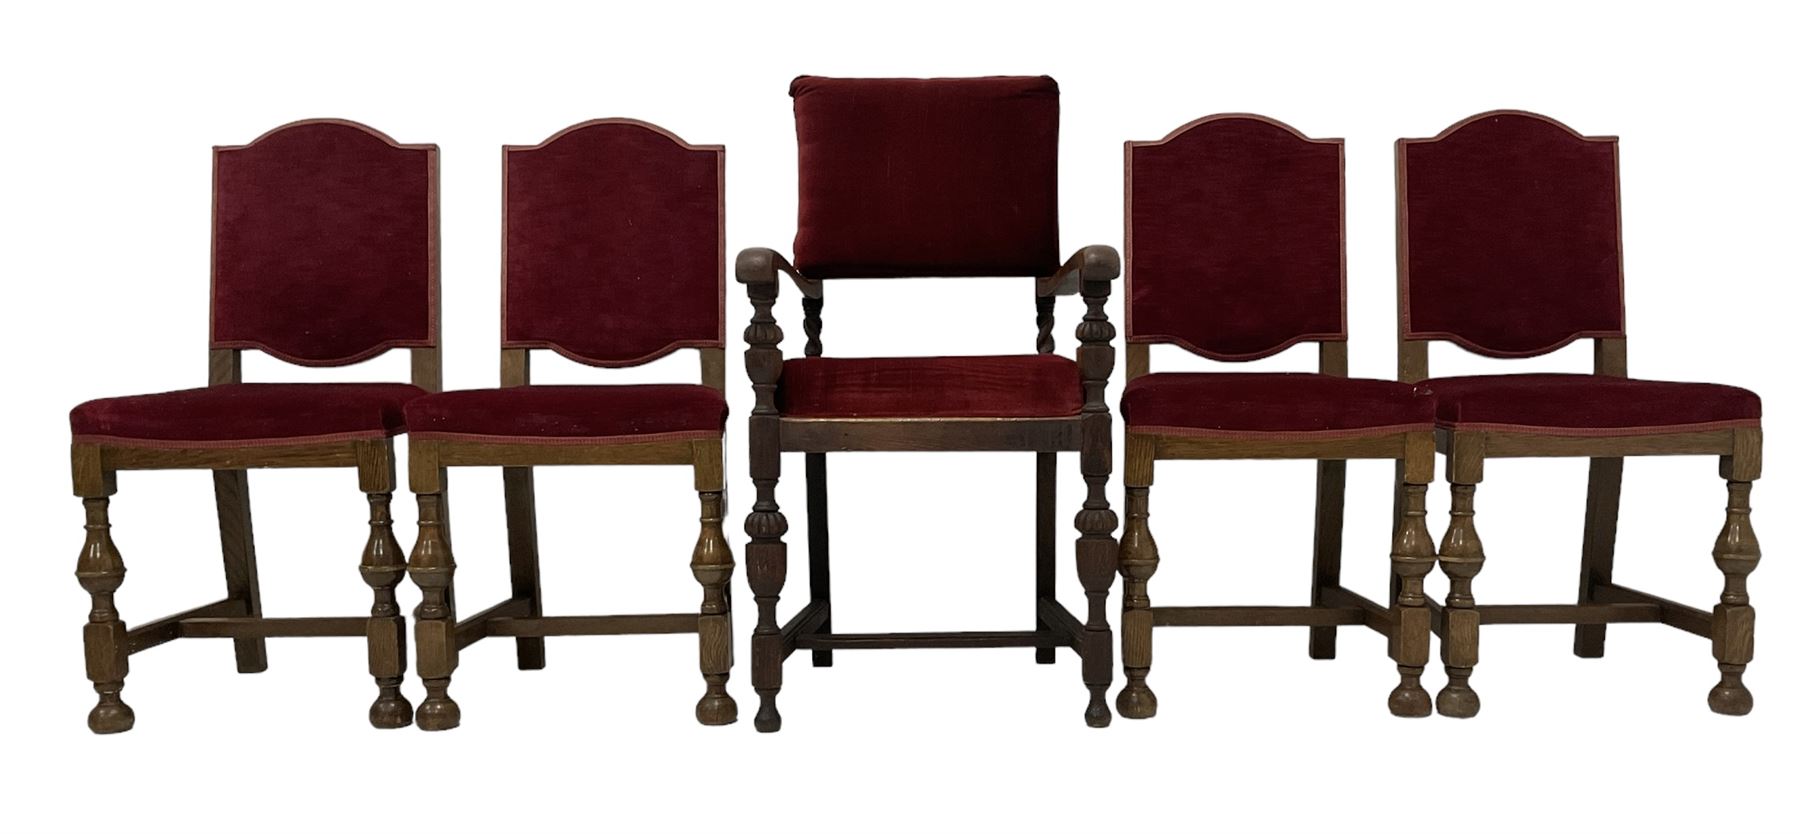 19th century oak armchair or carver dining chair